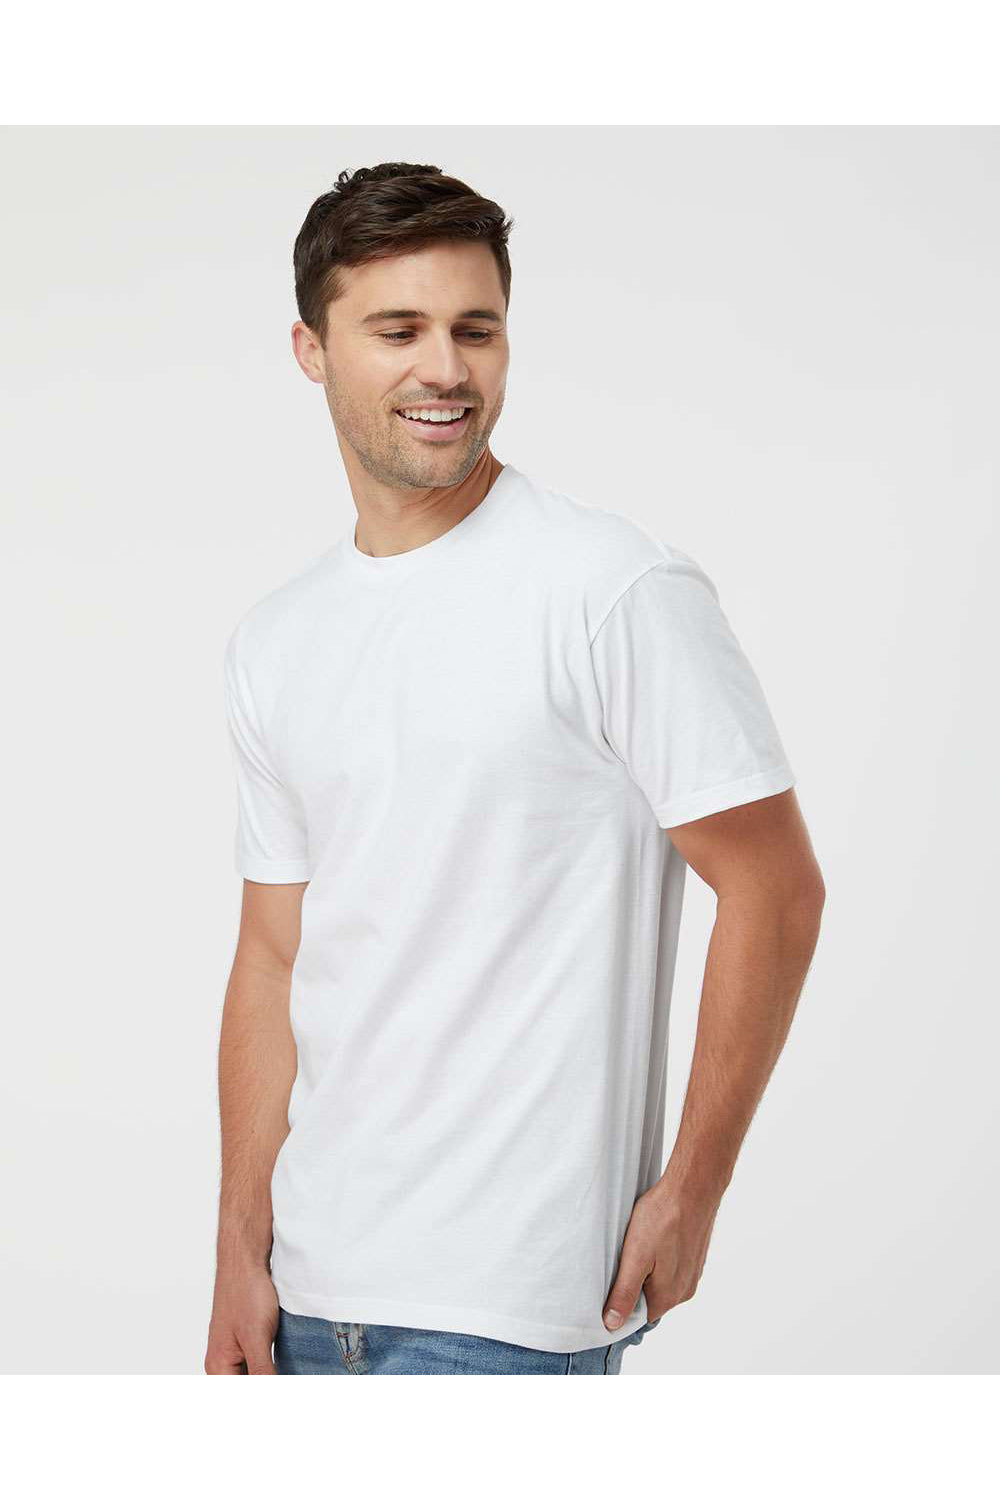 Tultex 290 Mens Jersey Short Sleeve Crewneck T-Shirt White Model Side